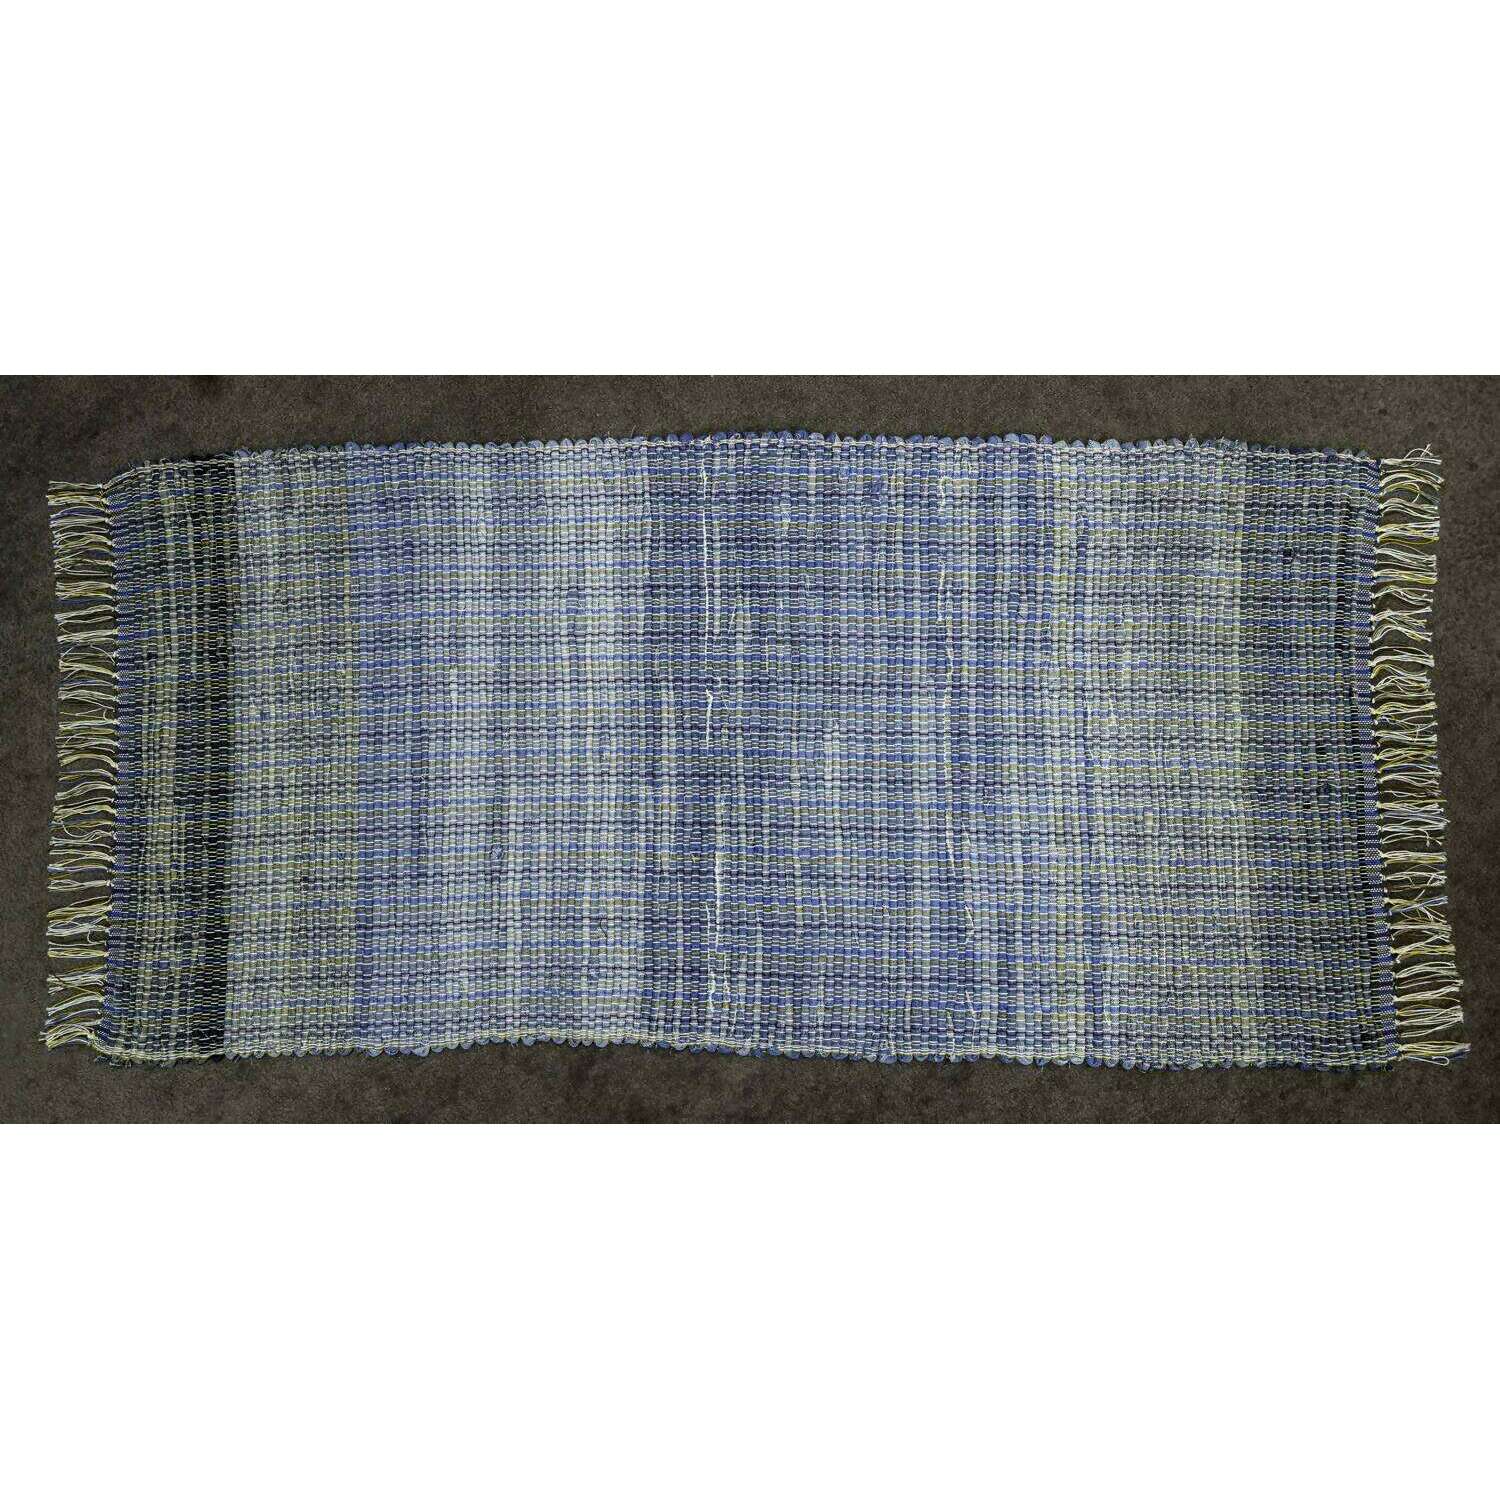 Rag Rugs: Denim (loom-made by hand)